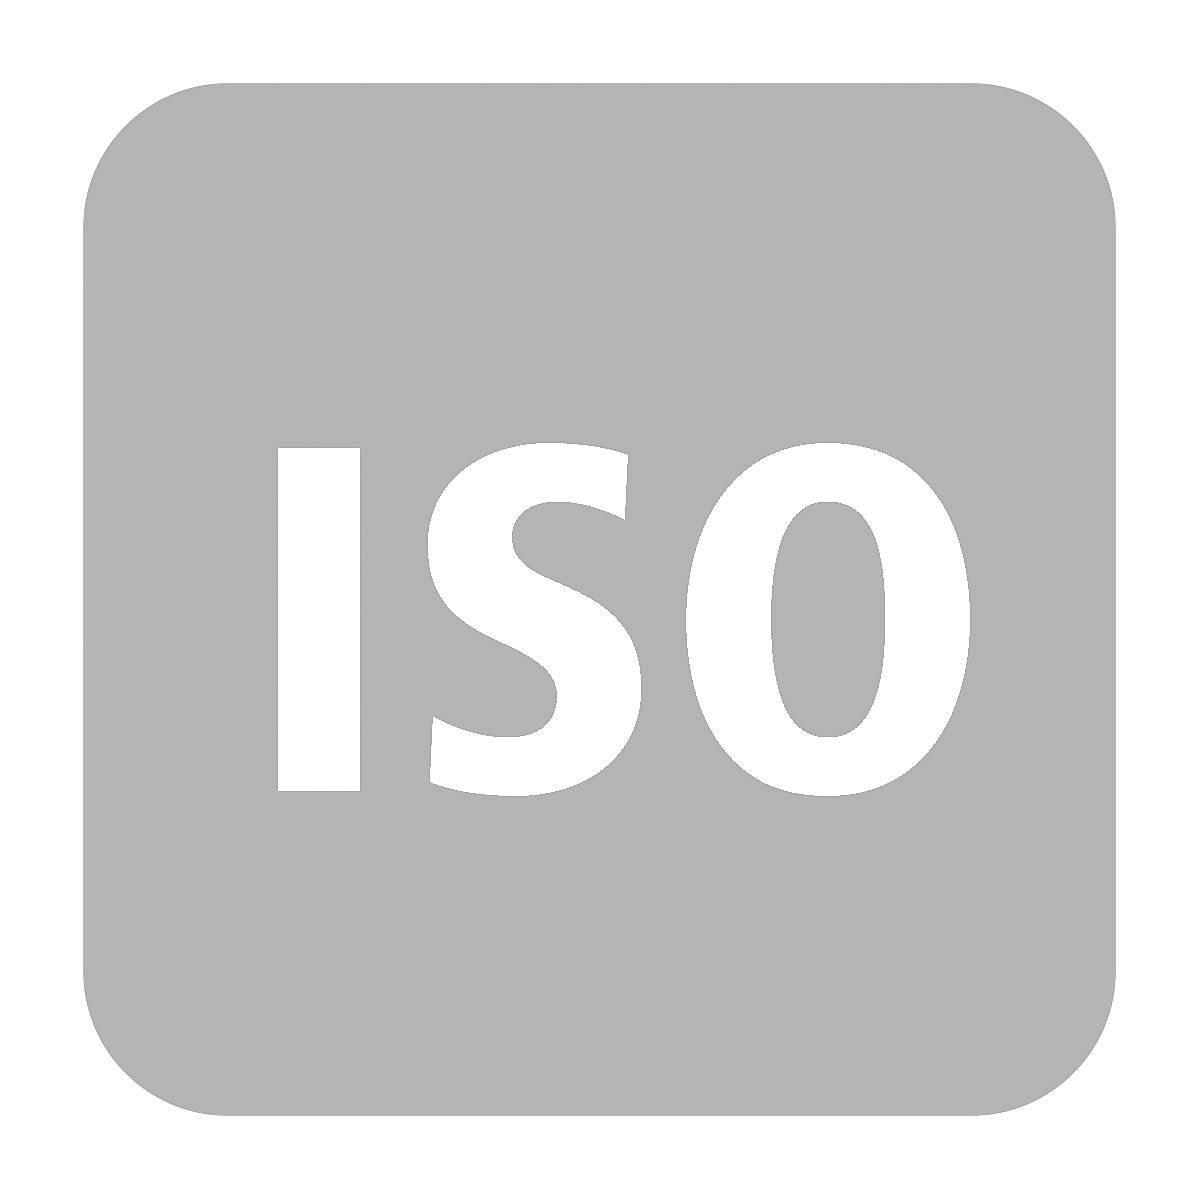 Sovrapprezzo versione ISO